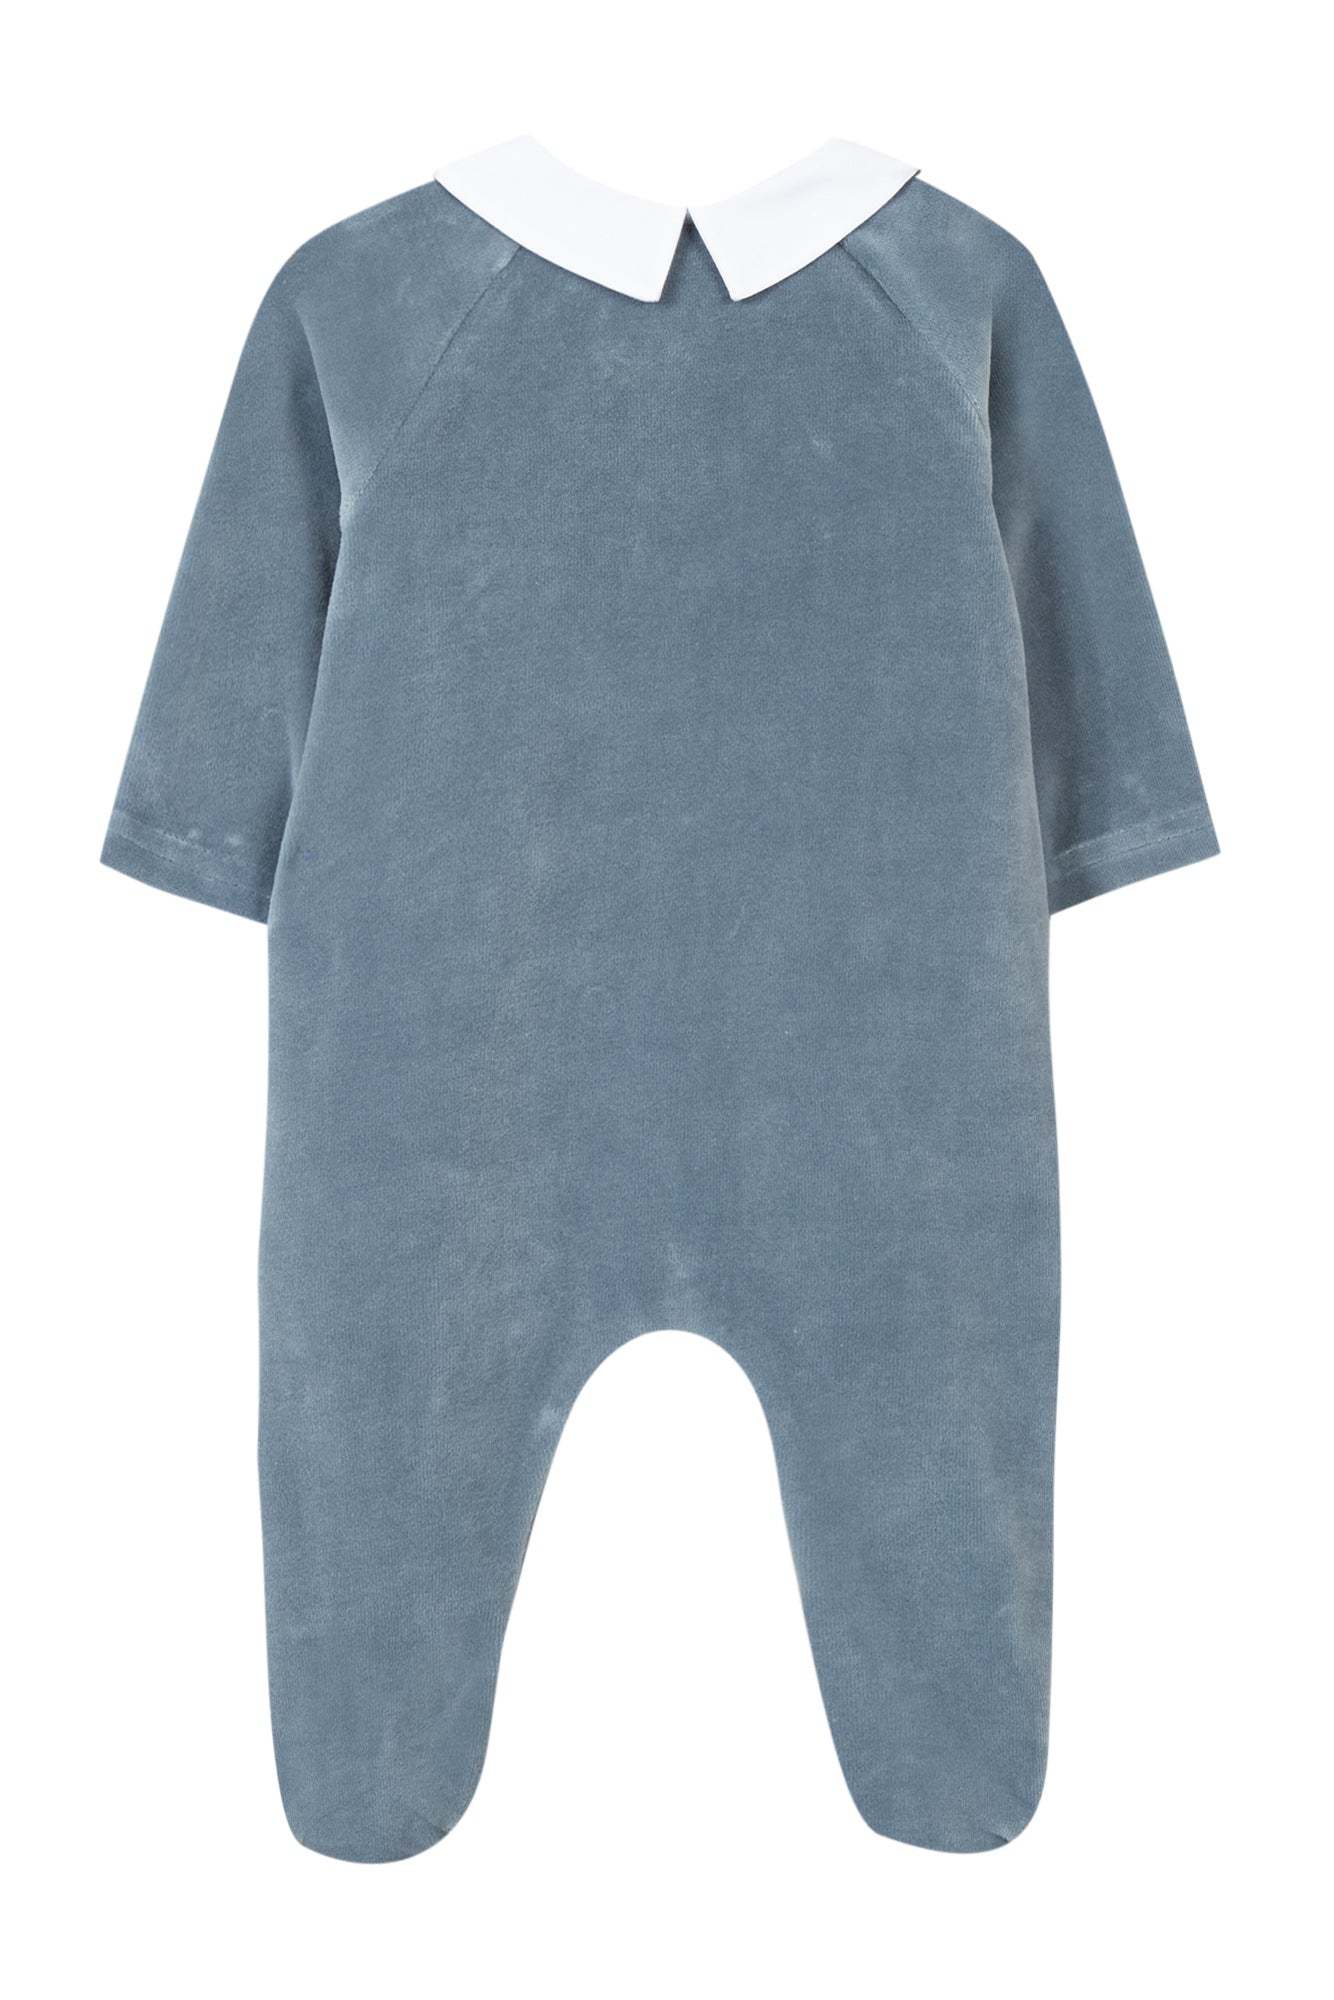 Pyjamas - Blue grey velour with alphabet Gray blue / 3M